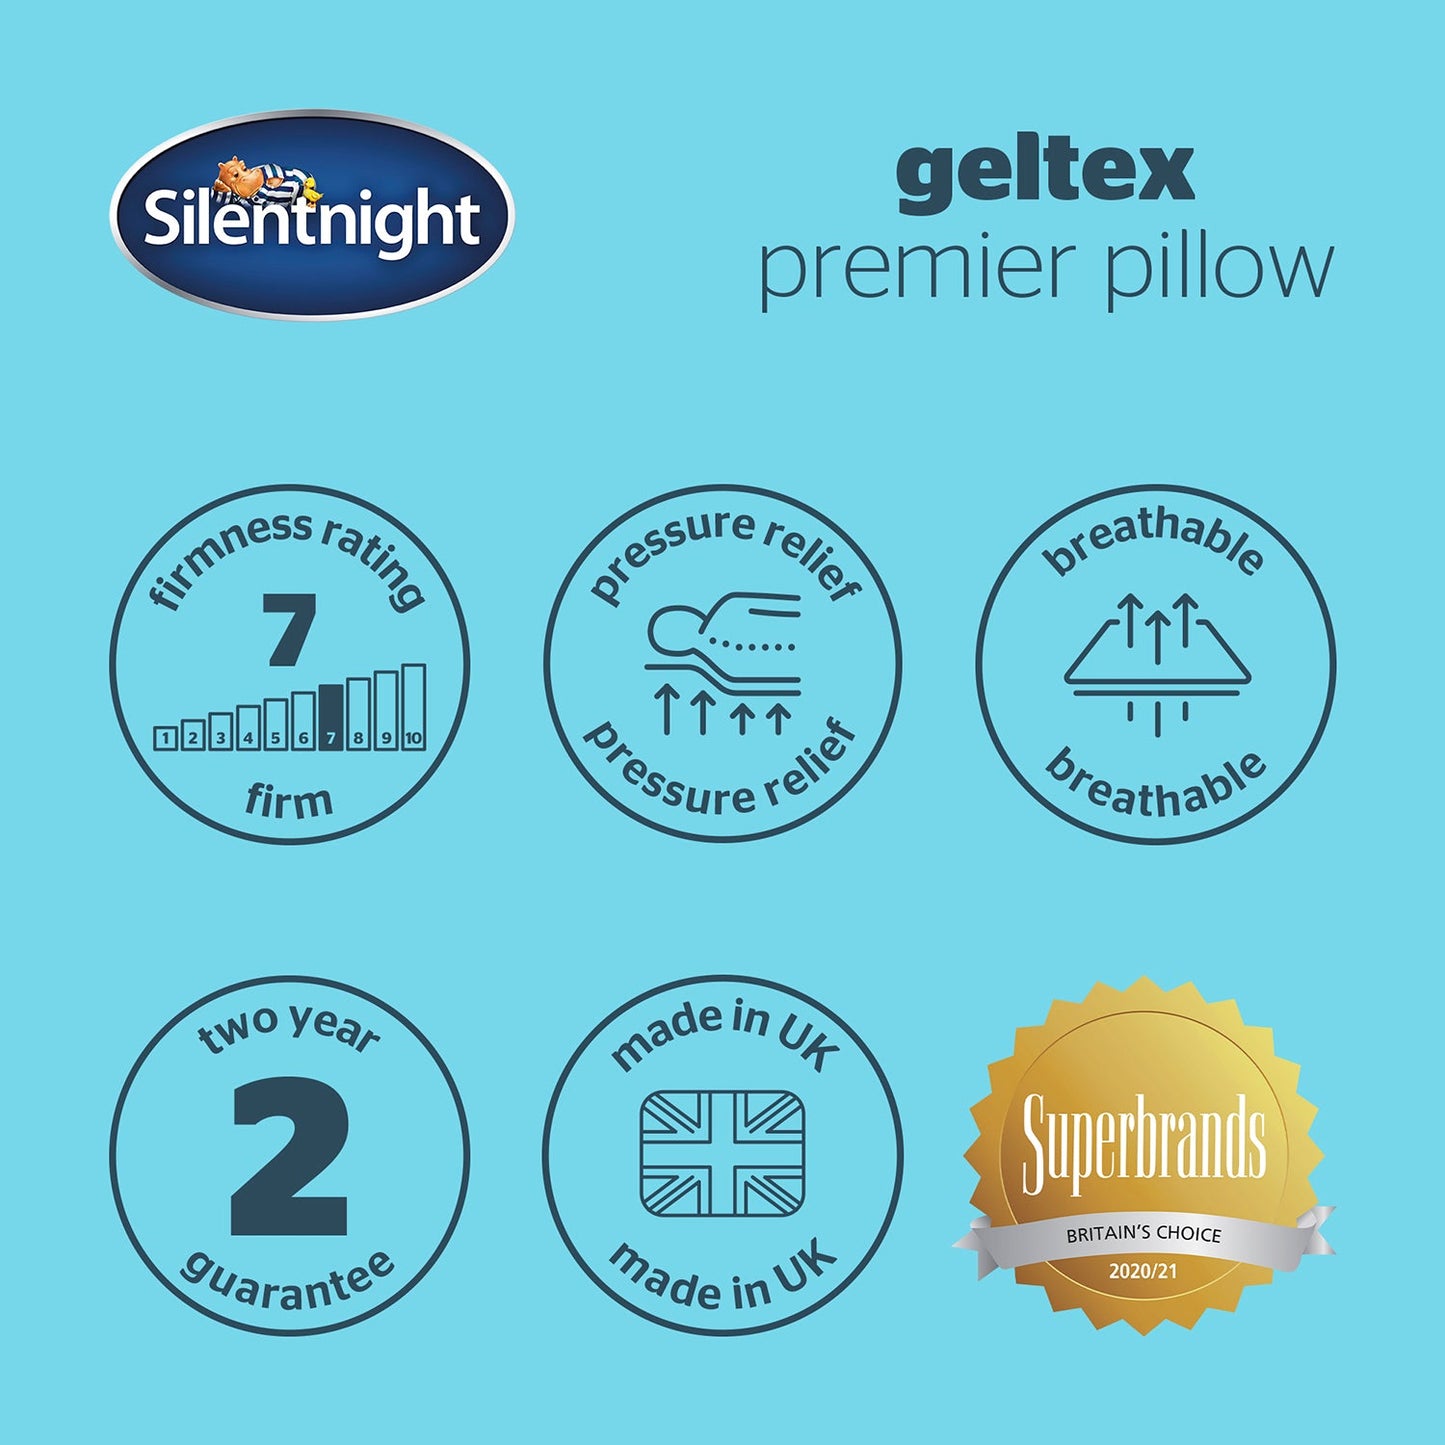 Silentnight Geltex Premier Pillow - Firm Support